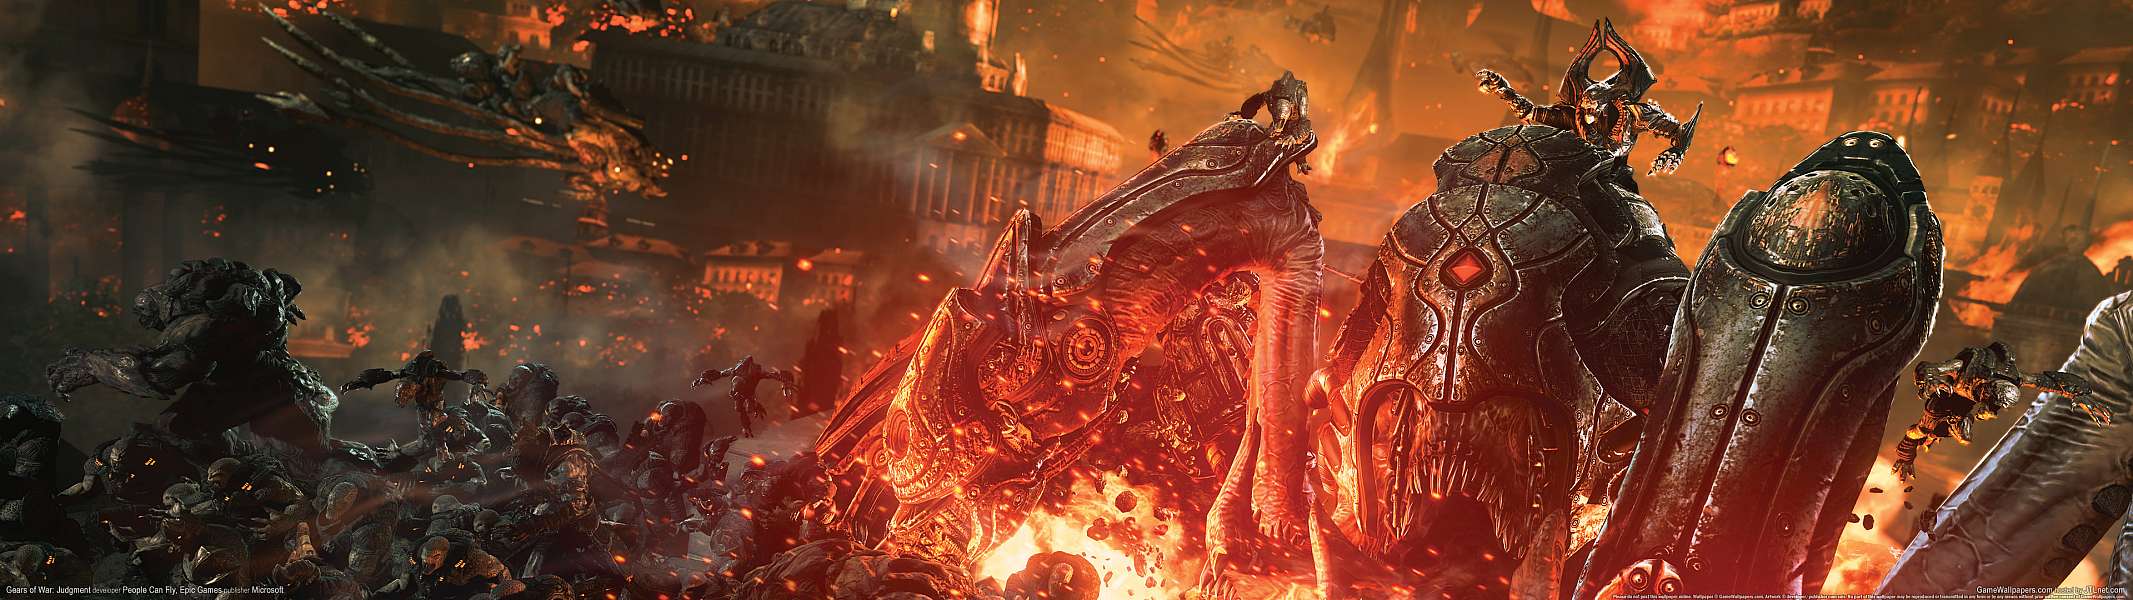 Gears of War: Judgment dual screen achtergrond